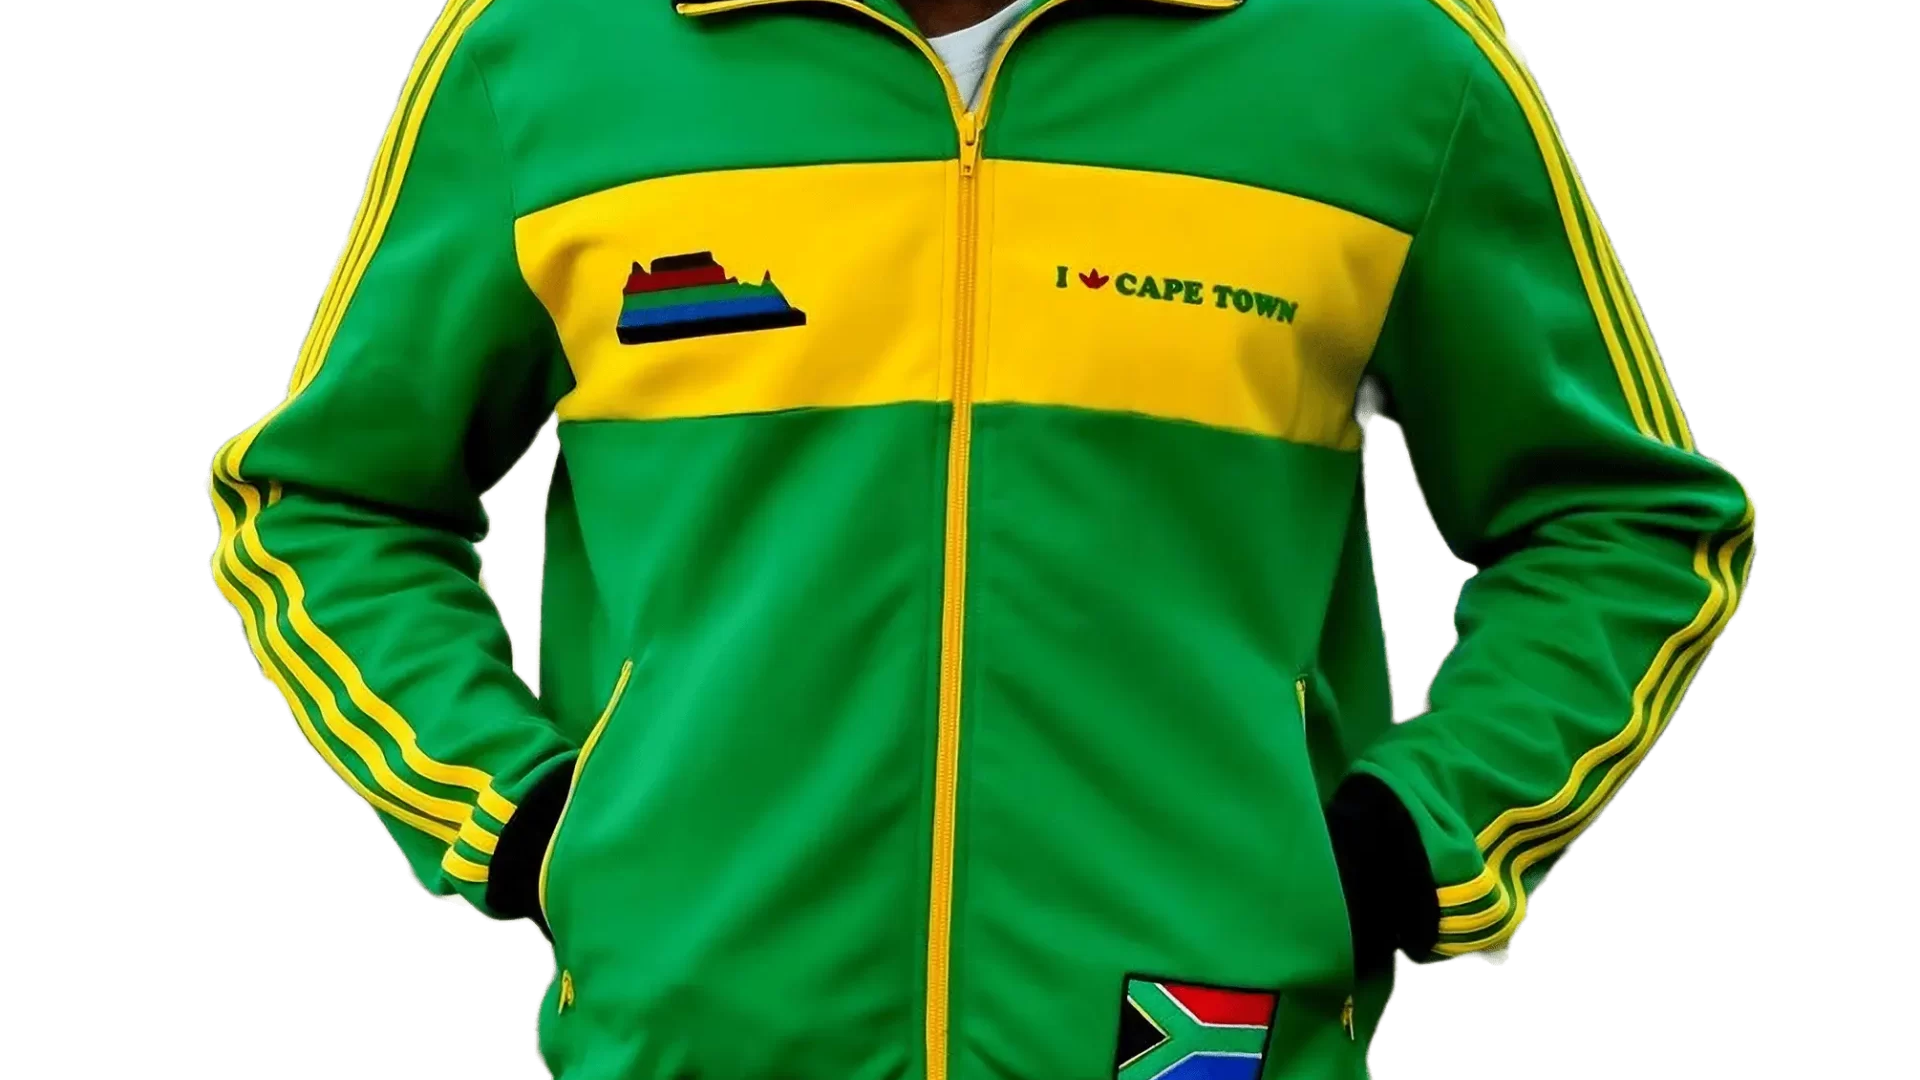 Men's 2006 Cape Town TT by Adidas Originals: Passionate (EnLawded.com file #lmchk48054ip2y122409kg9st)